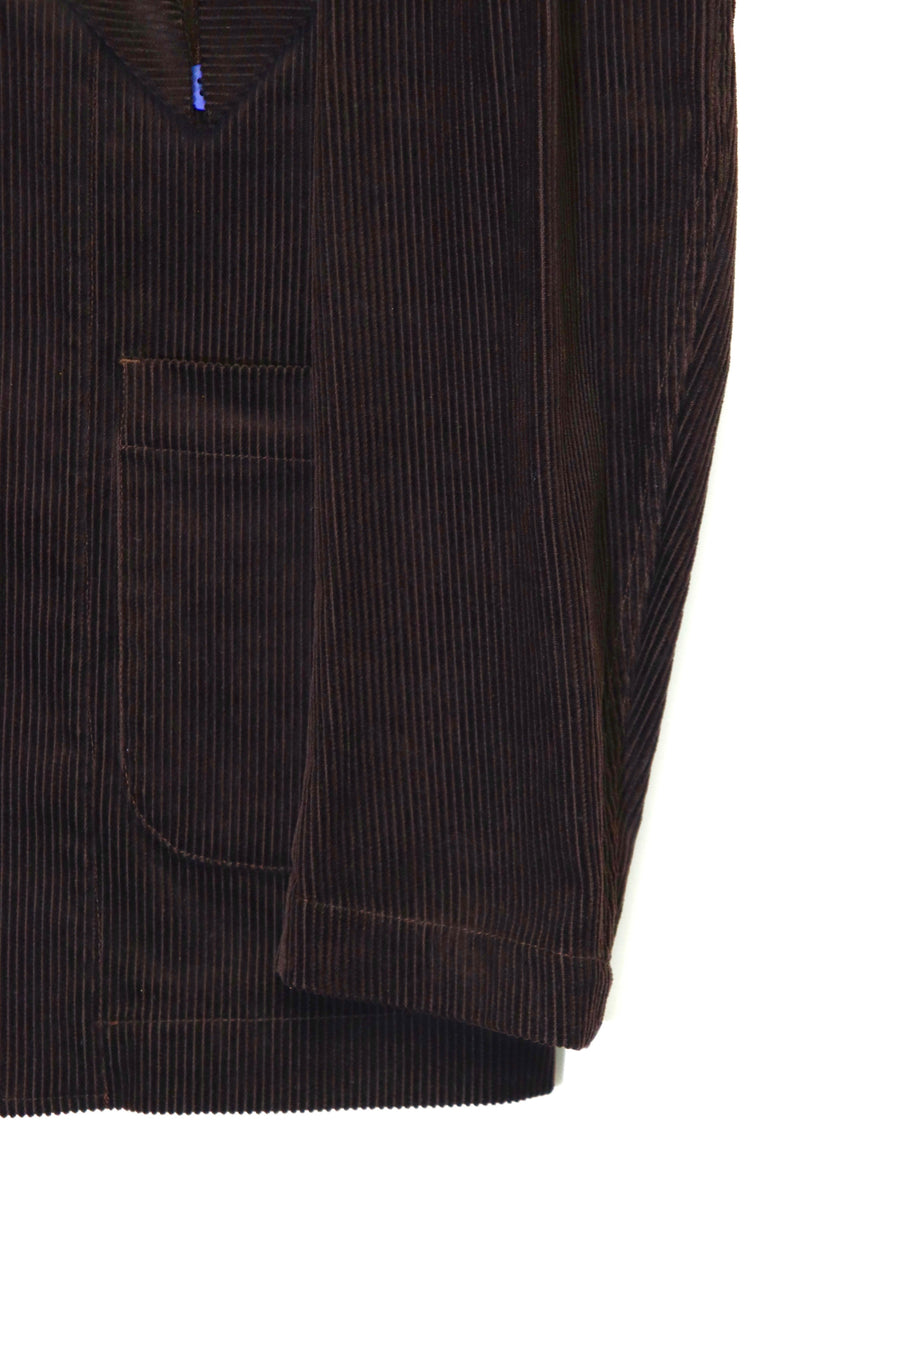 【20%OFF】elephant TRIBAL fabrics  Inside Pocket JKT（BROWN）